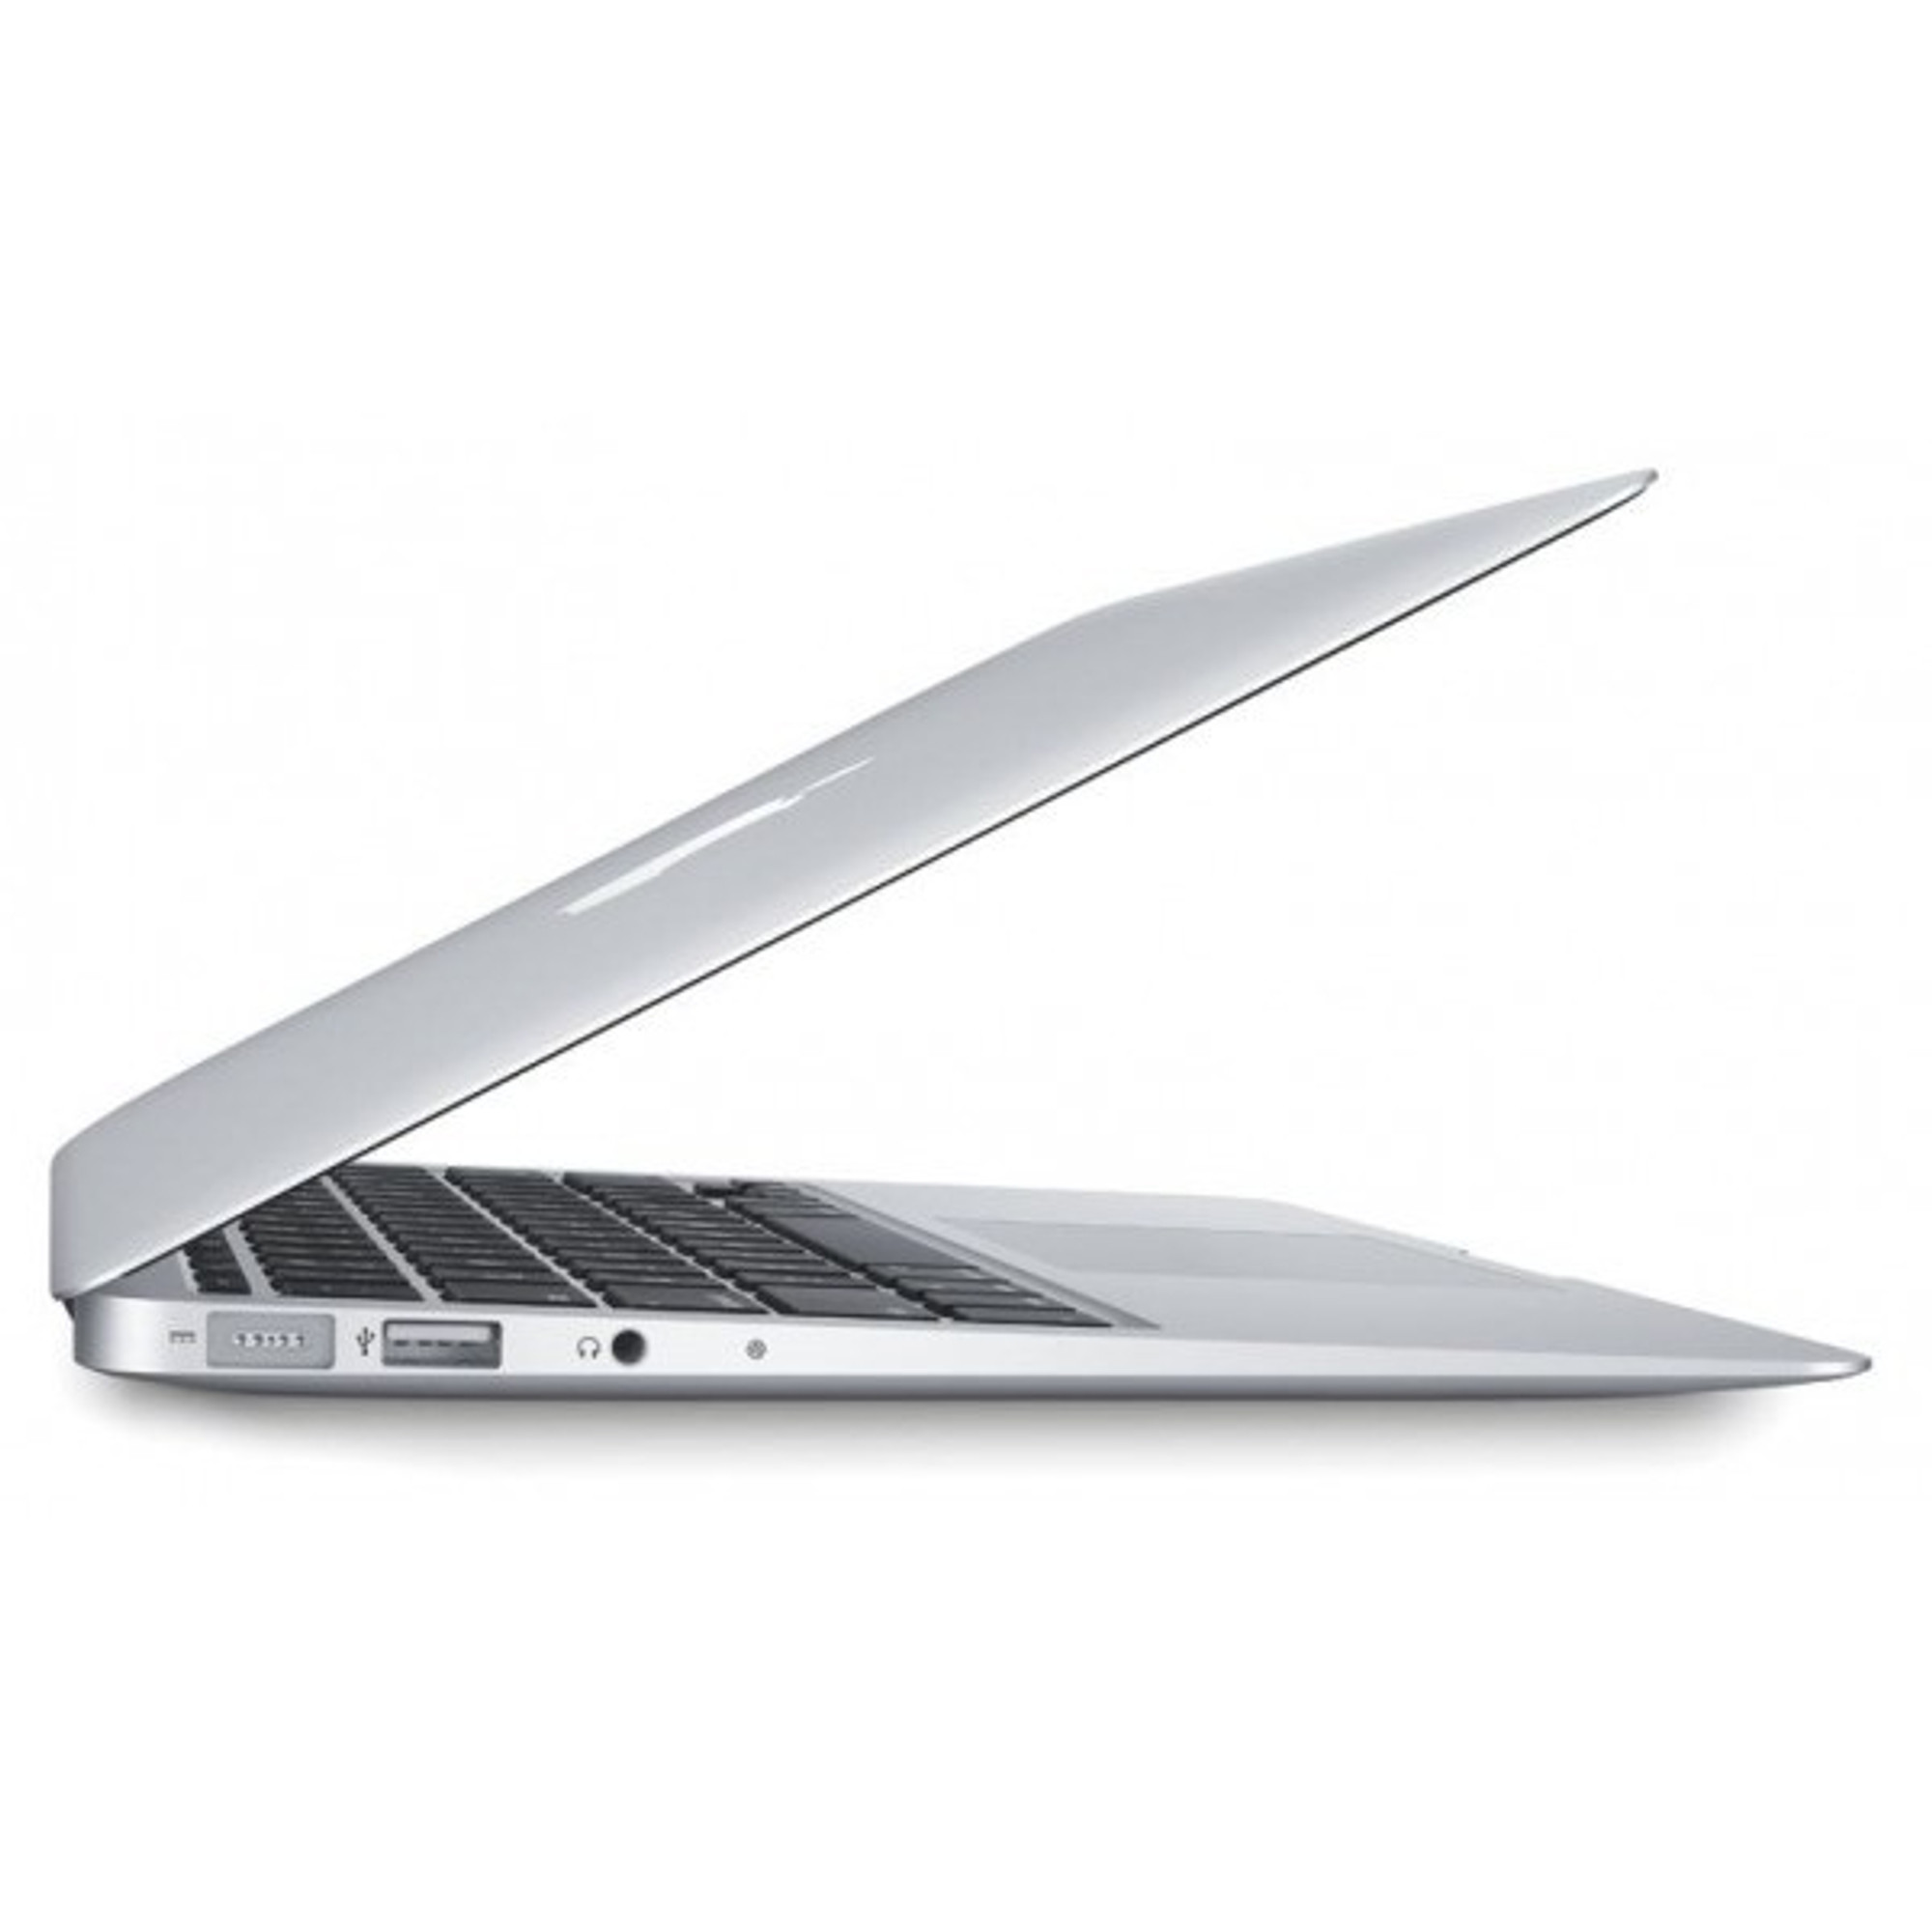 Apple MacBook Air 11.6 LED Laptop Intel i5-3317U Dual Core 1.7GHz 4GB 64GB  SSD